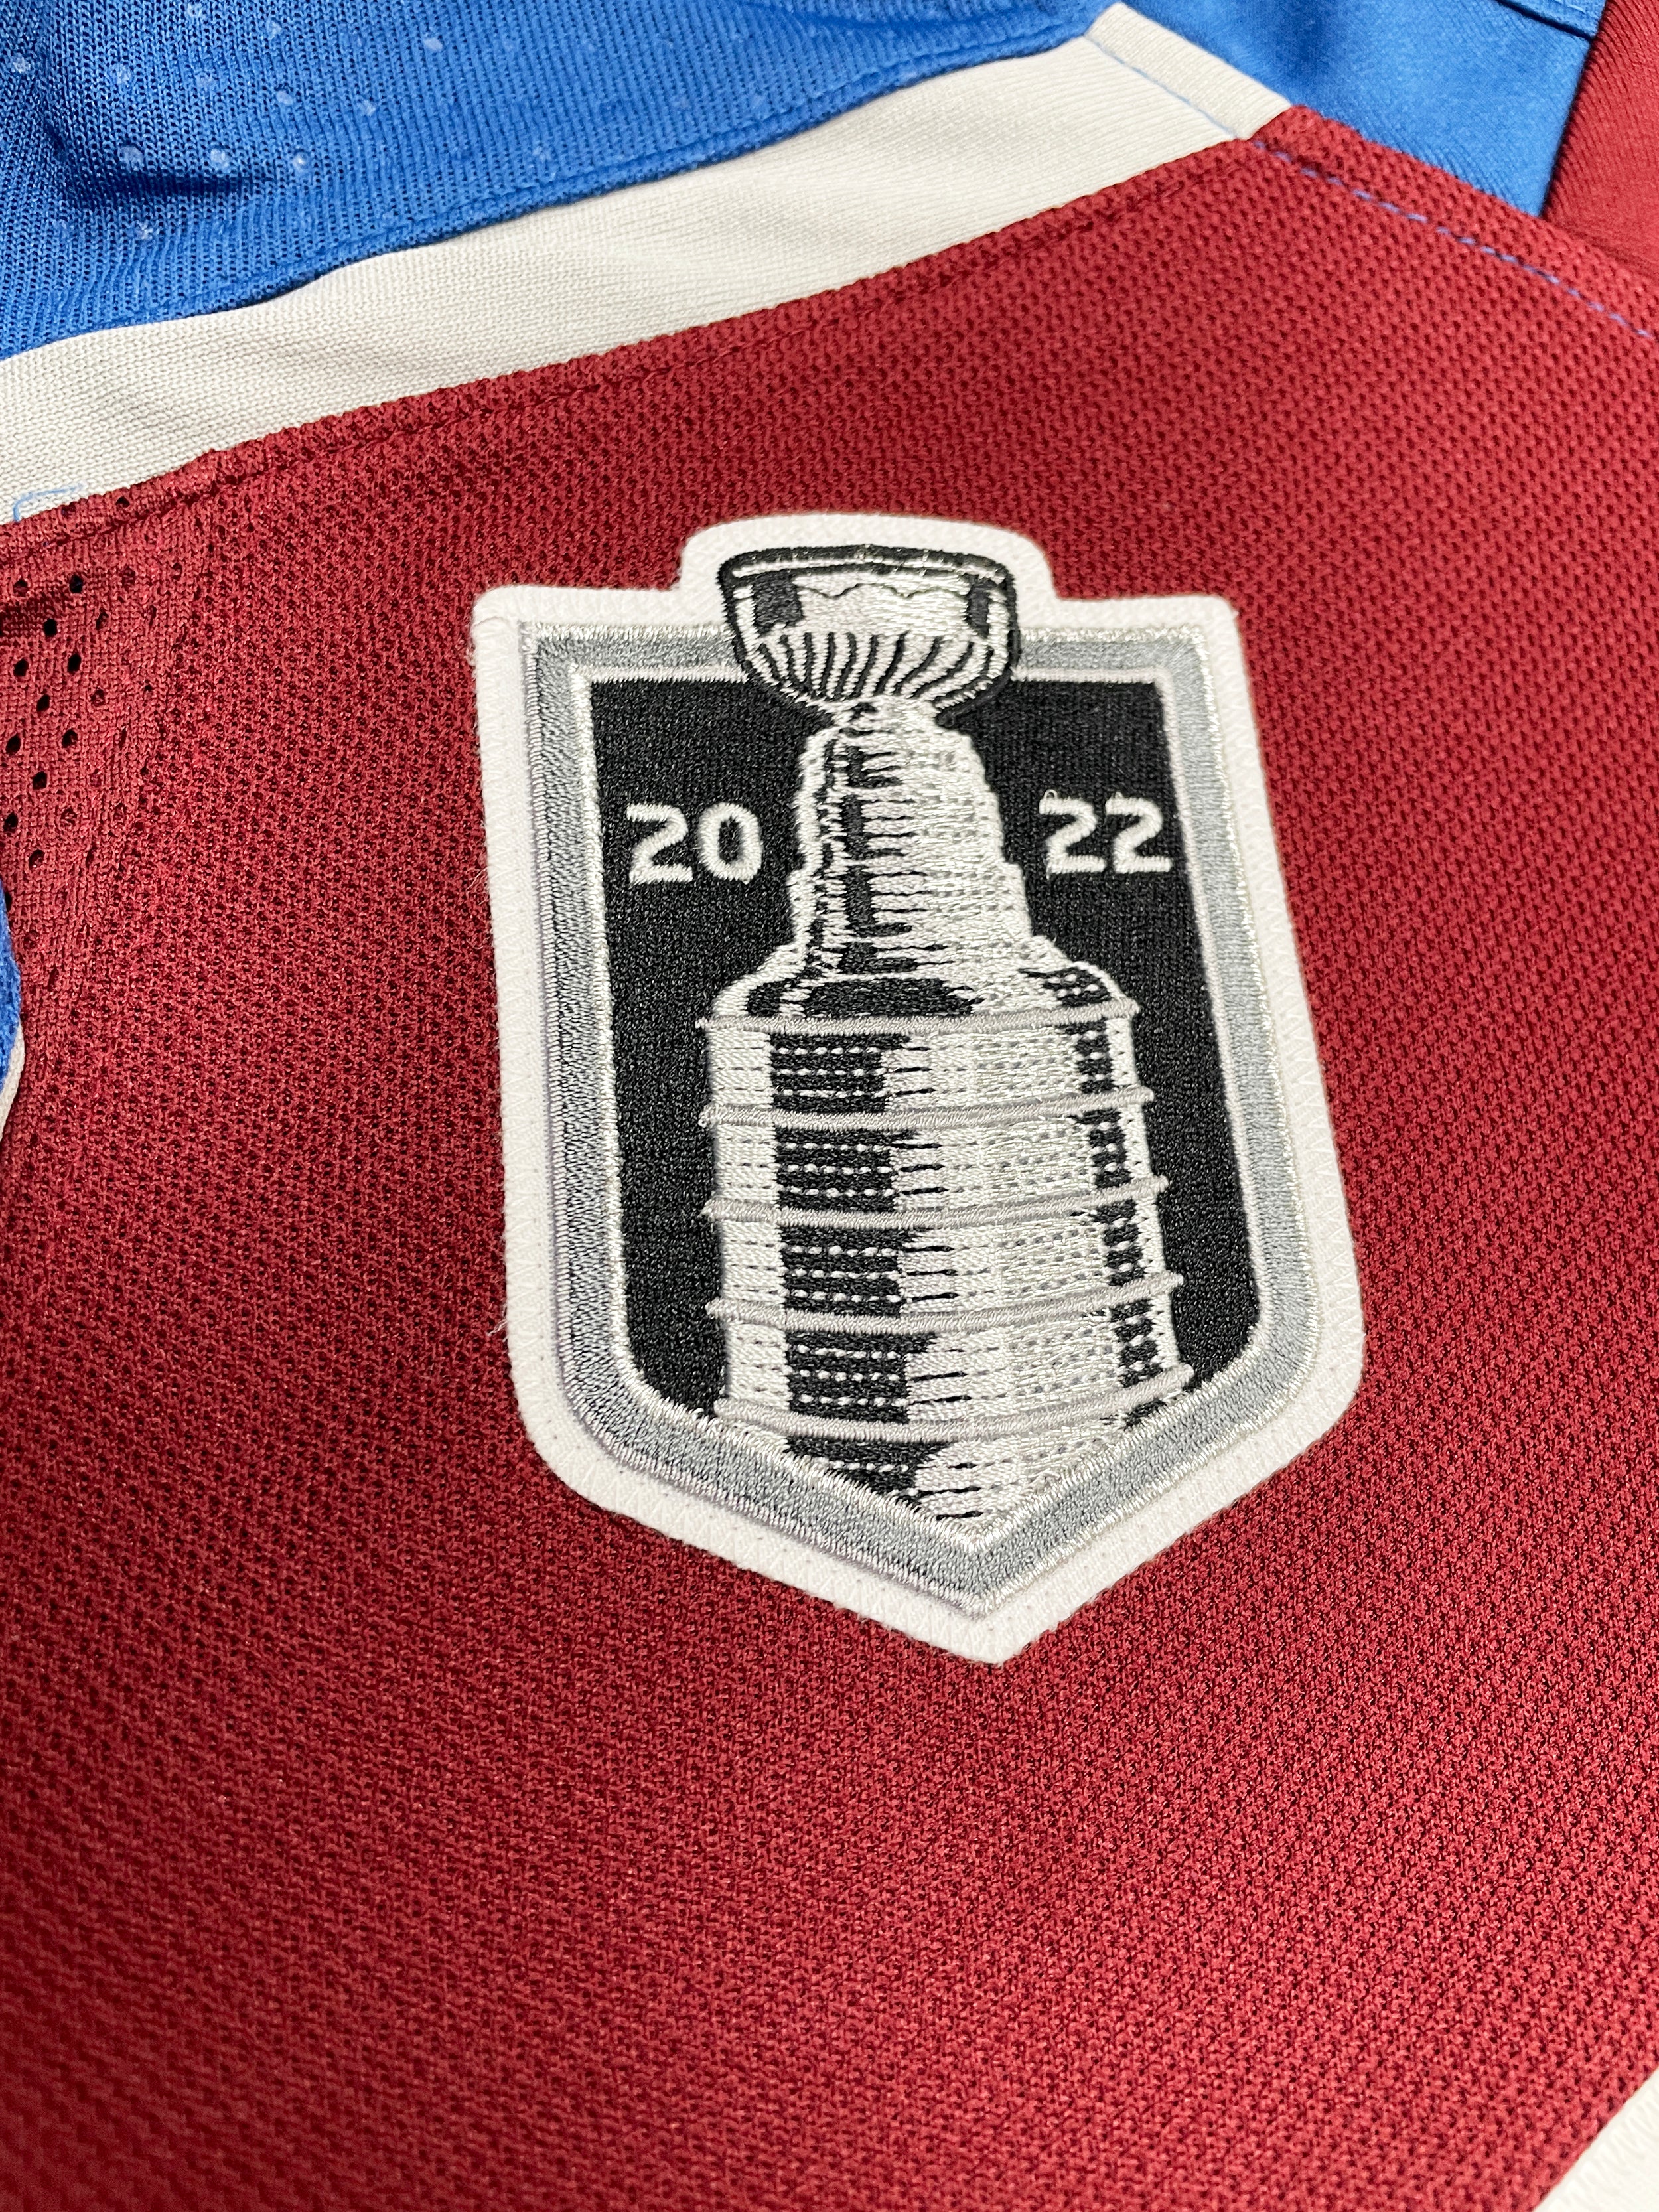 Cale Makar Colorado Avalanche Adidas Primegreen Authentic NHL Hockey Jersey - Third Alternate / XXS/42